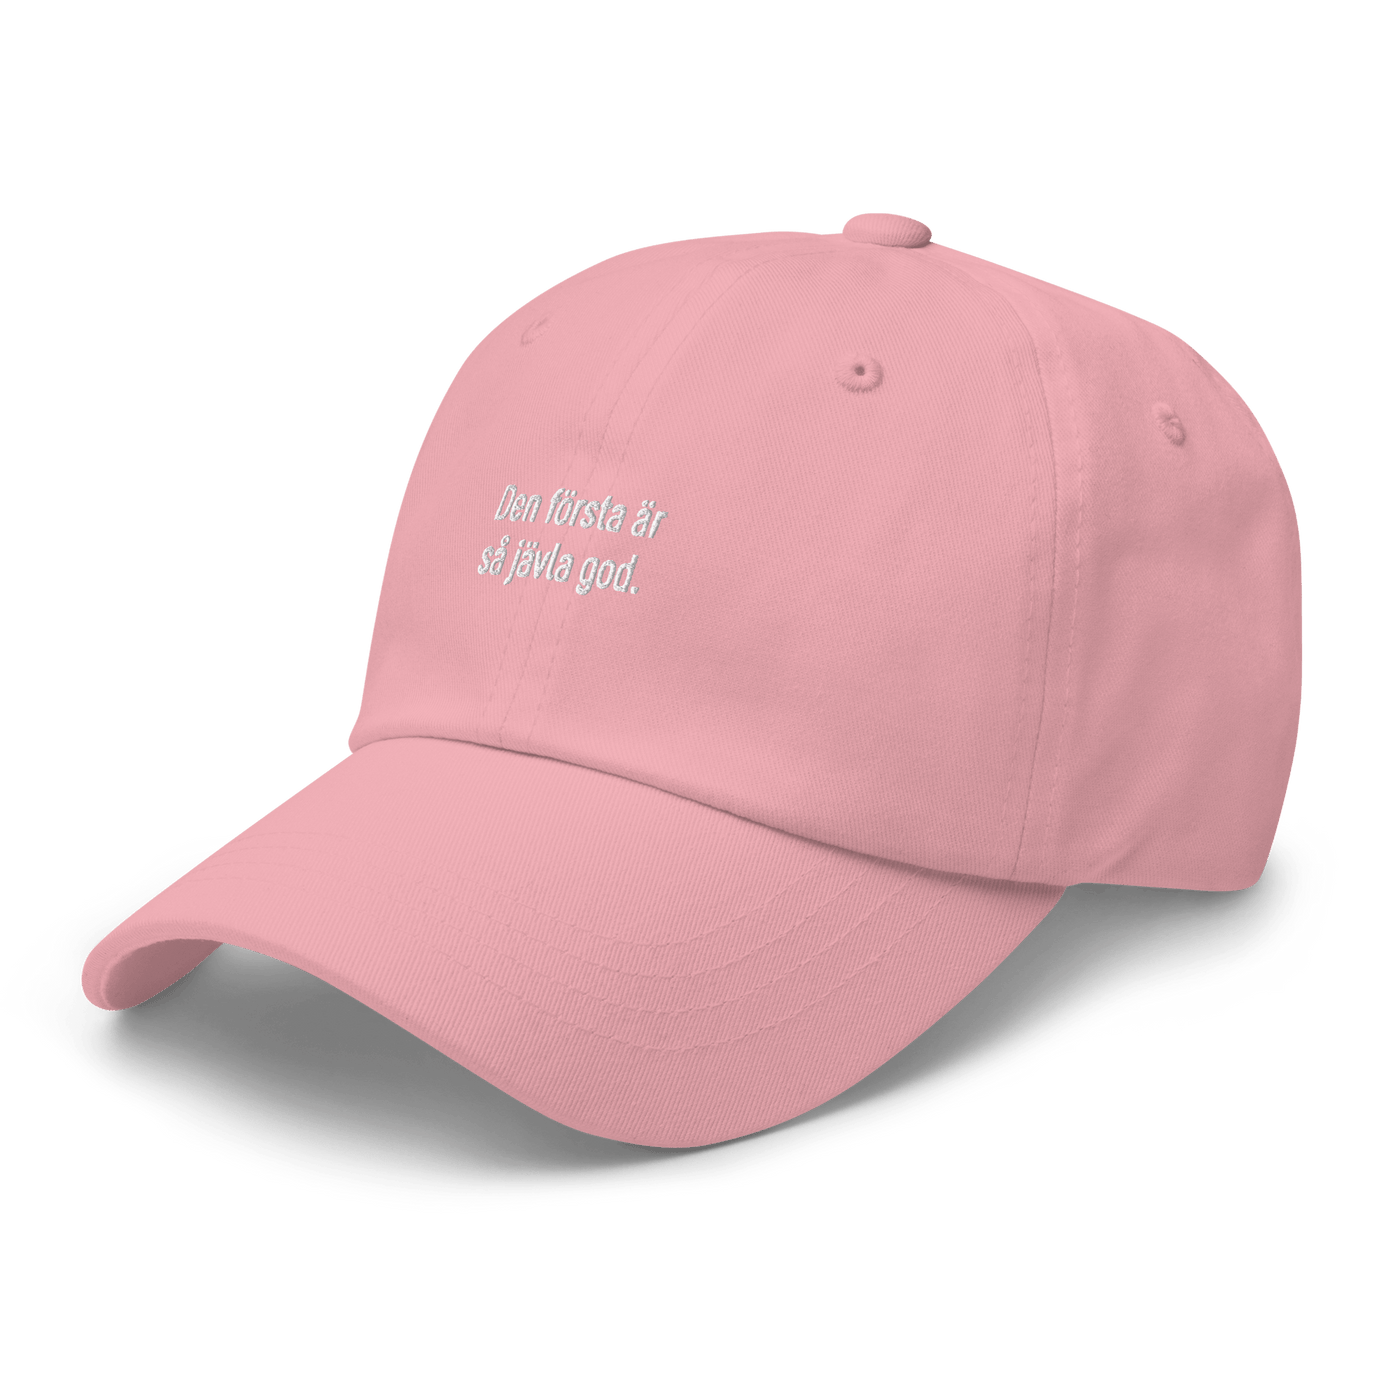 Den första Dad hat - Pink - - Just Another Cap Store